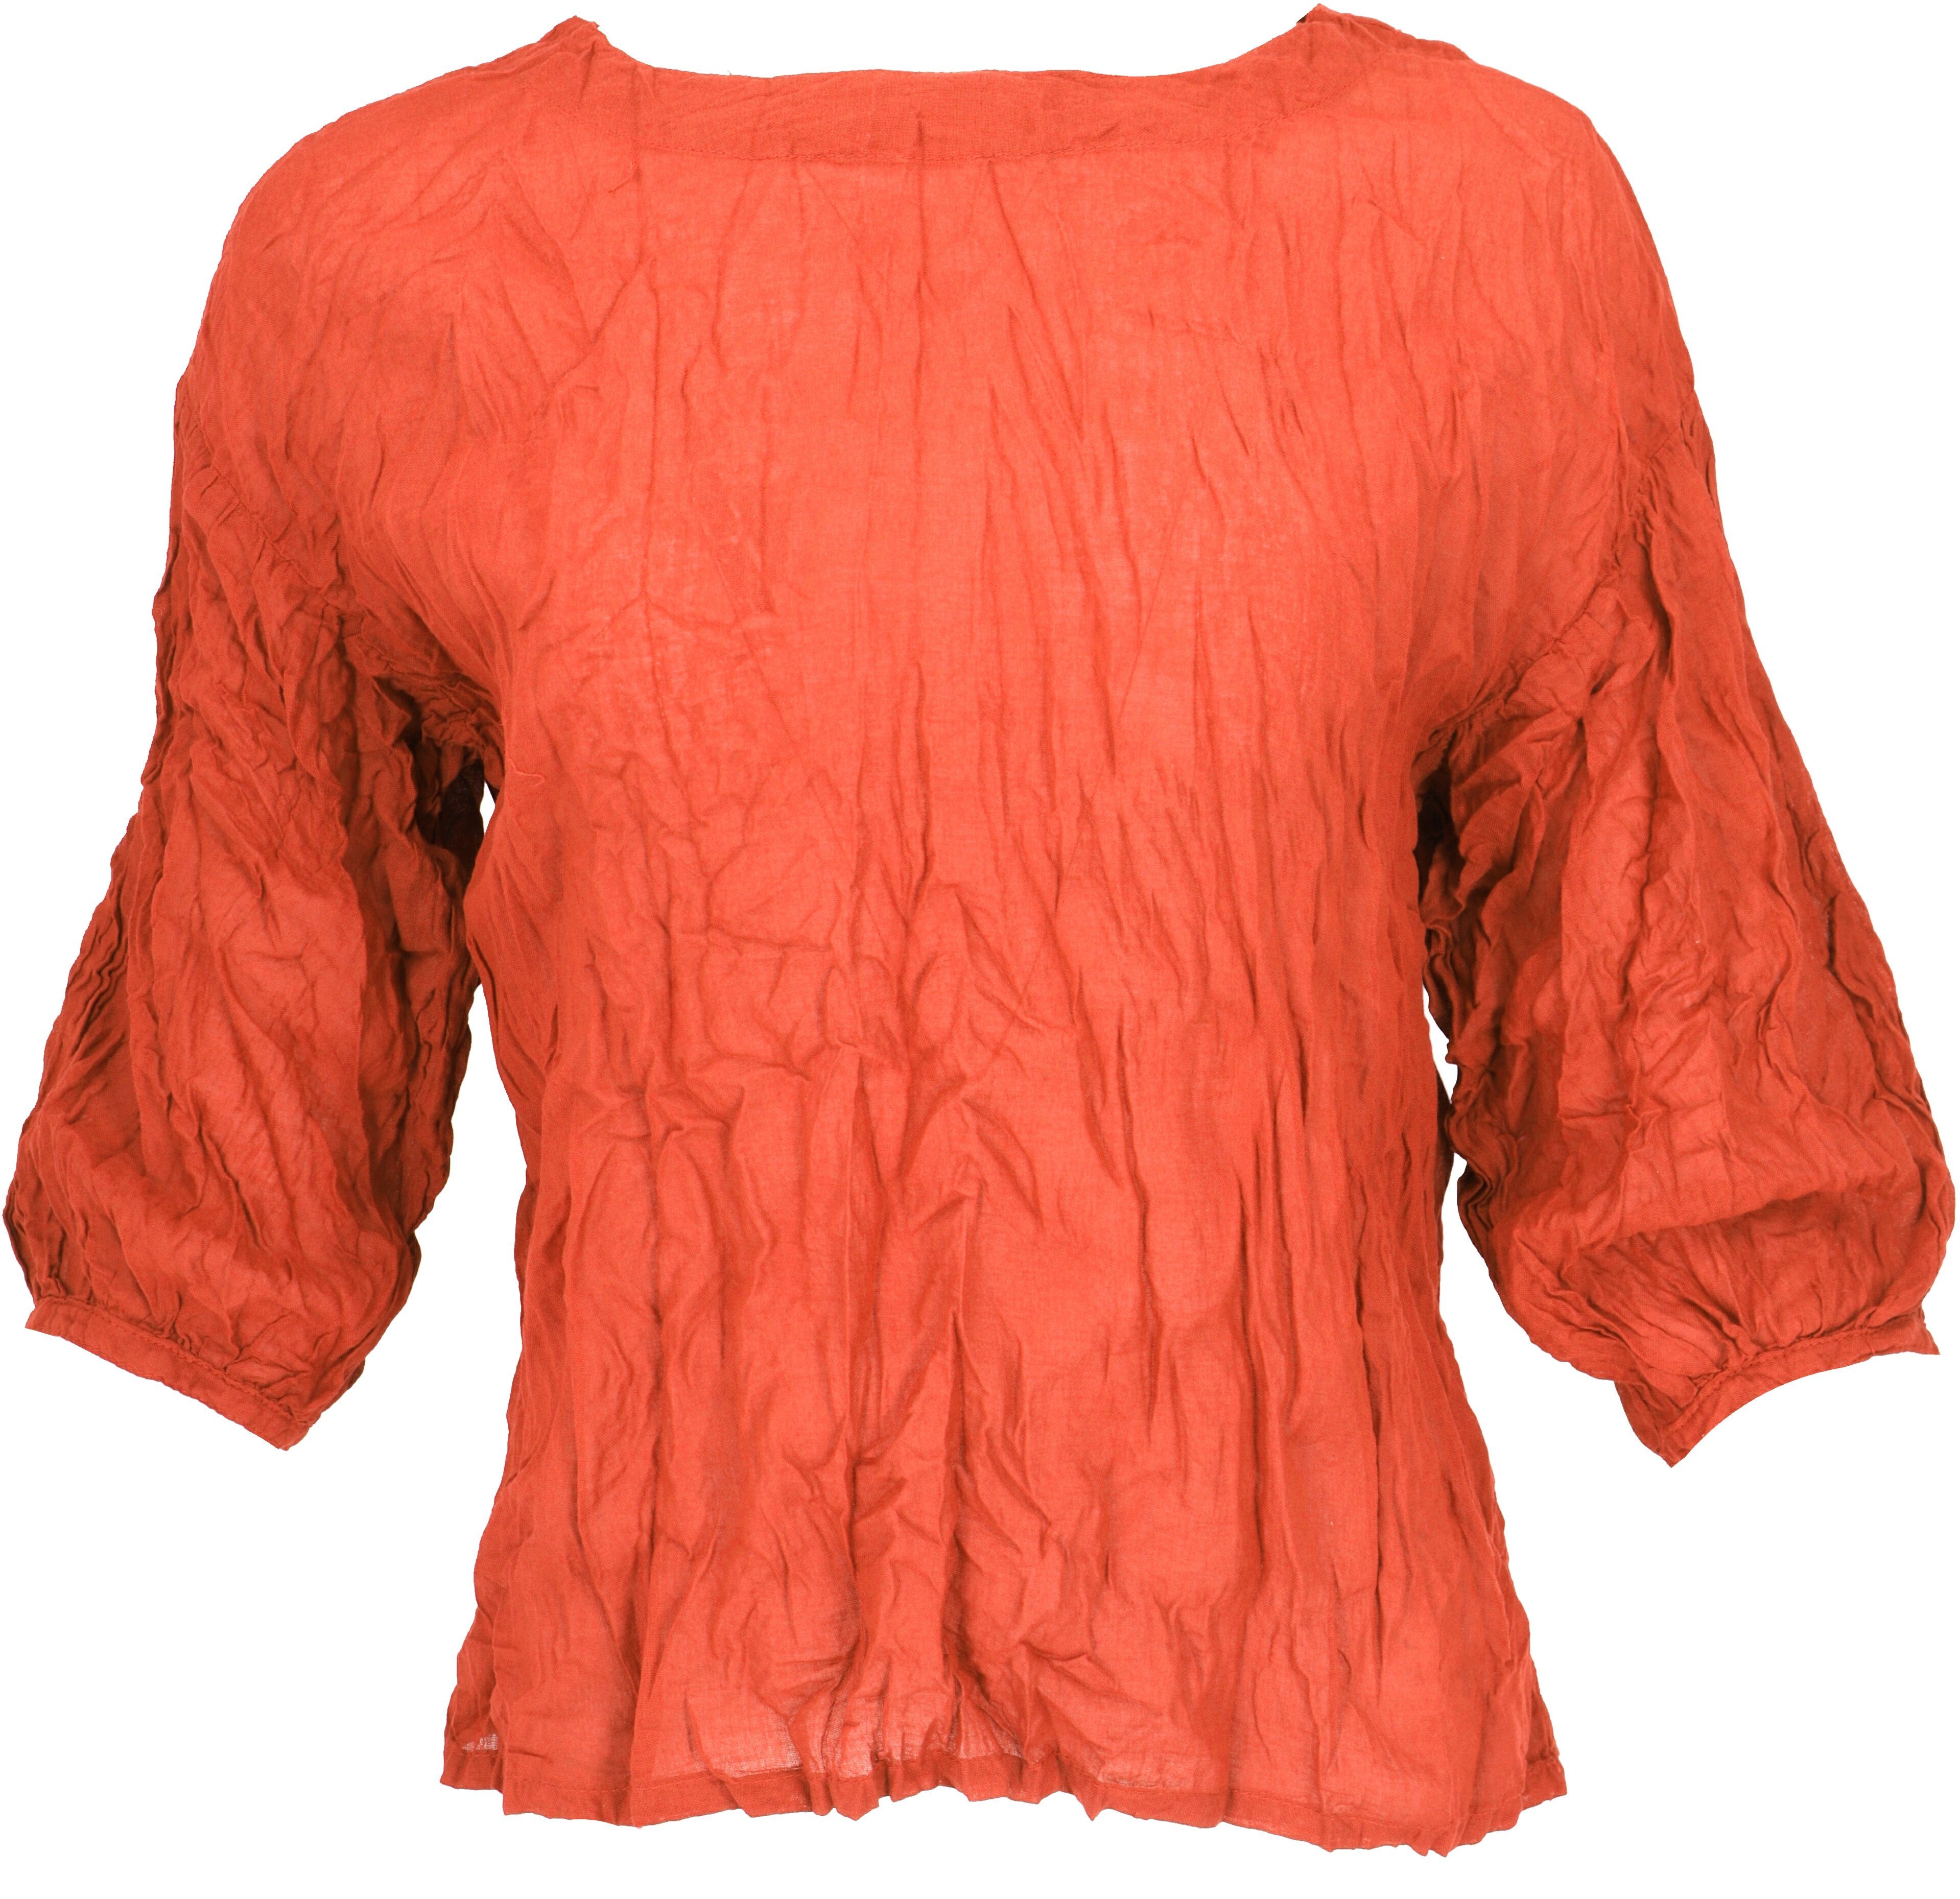 Longbluse Crash alternative Krinkelbluse, orange Blusenshirt, Bekleidung Guru-Shop Blusentop.. Boho